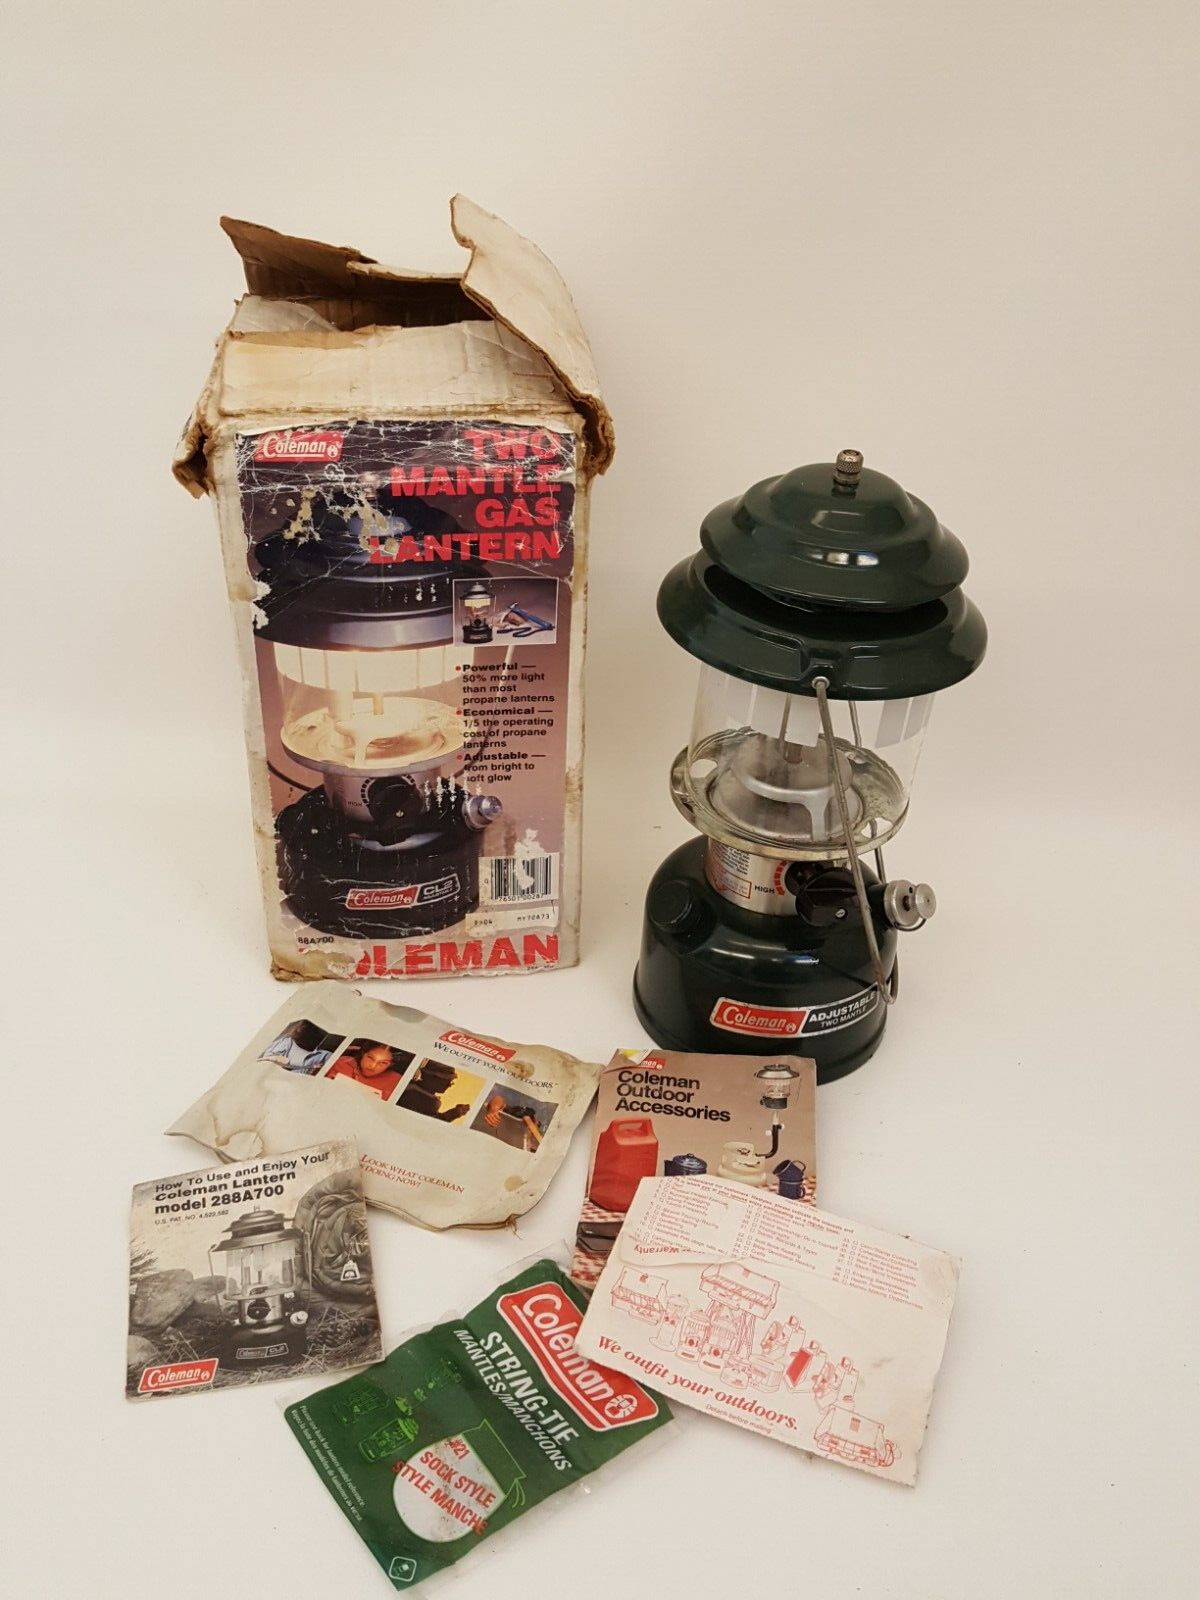 Vintage 1987 Coleman 2 mantle gas lantern 288A700 in original box